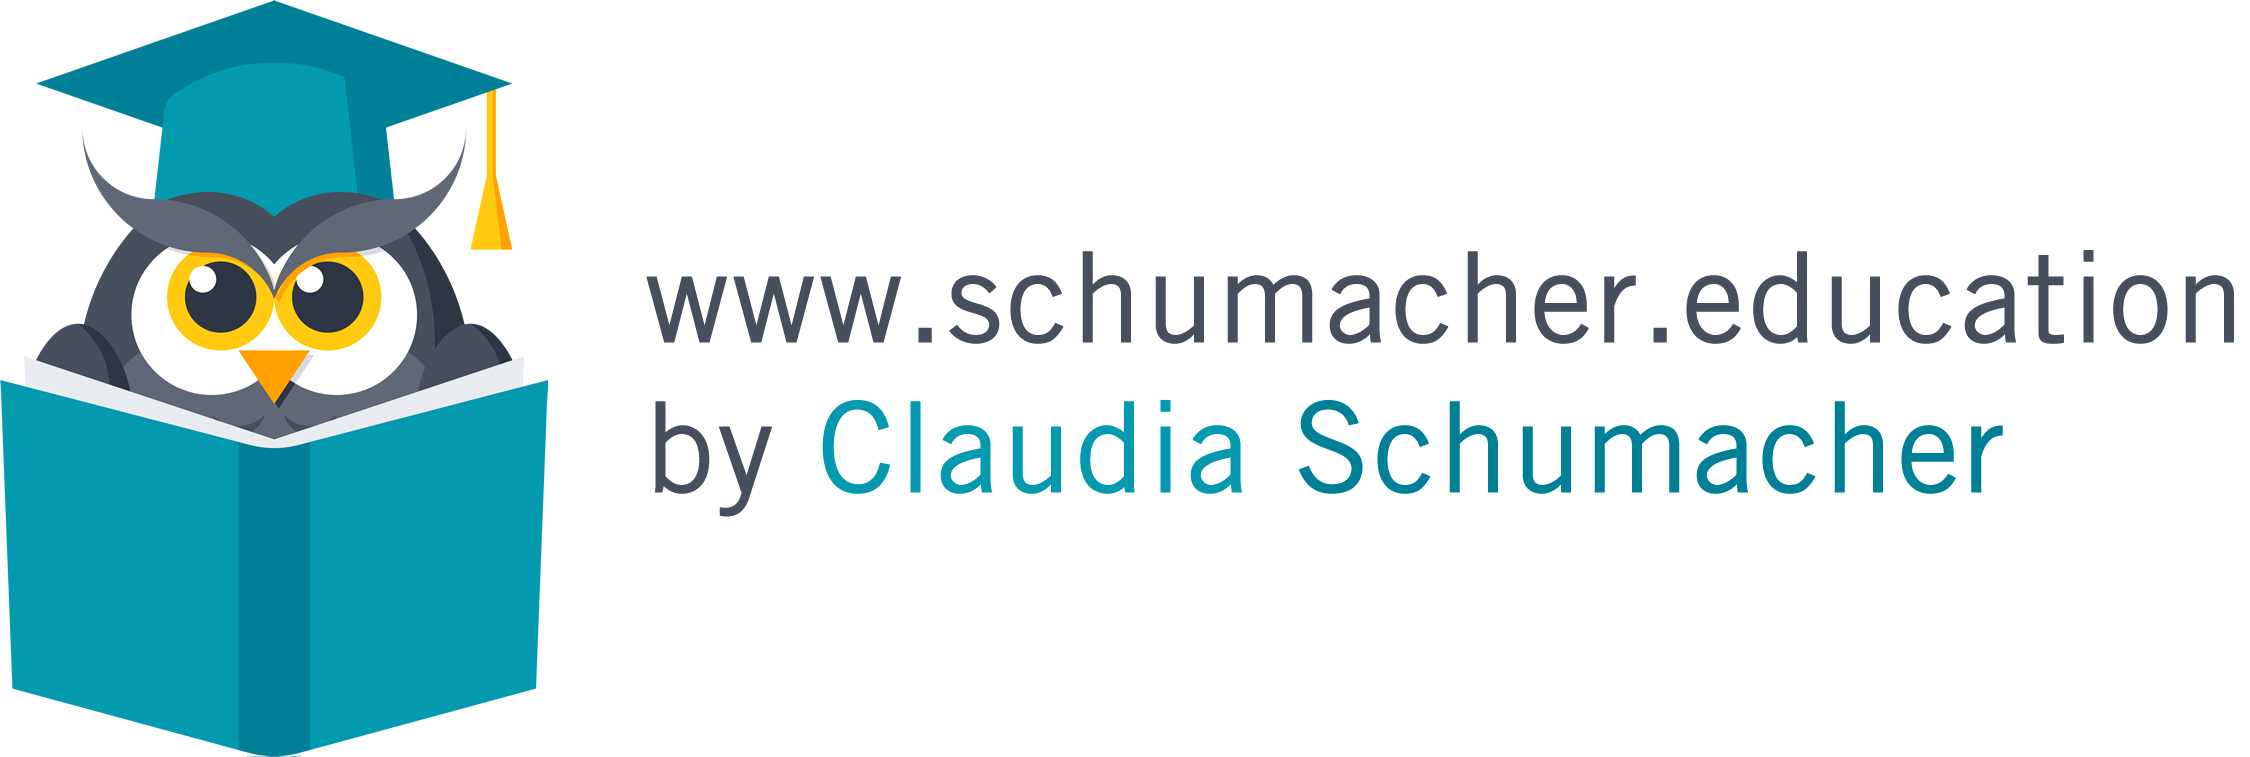 Schumacher.education